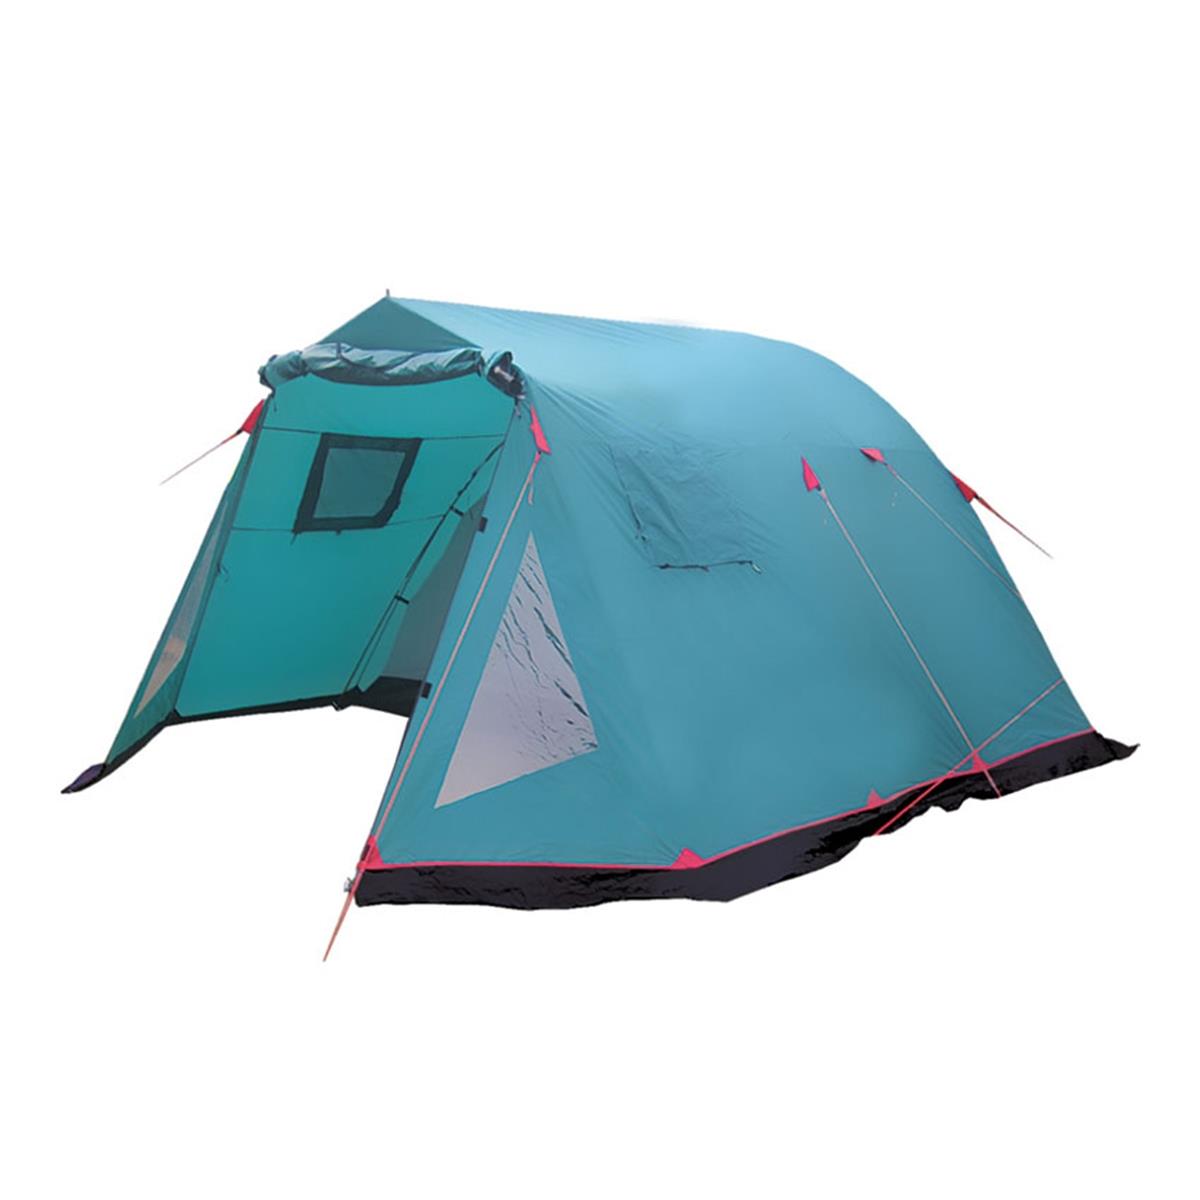 Палатка BALTIC WAVE 5 V2 зеленый (TRT-79) Tramp походная палатка sarma 2 v2 зеленый trt 30 tramp